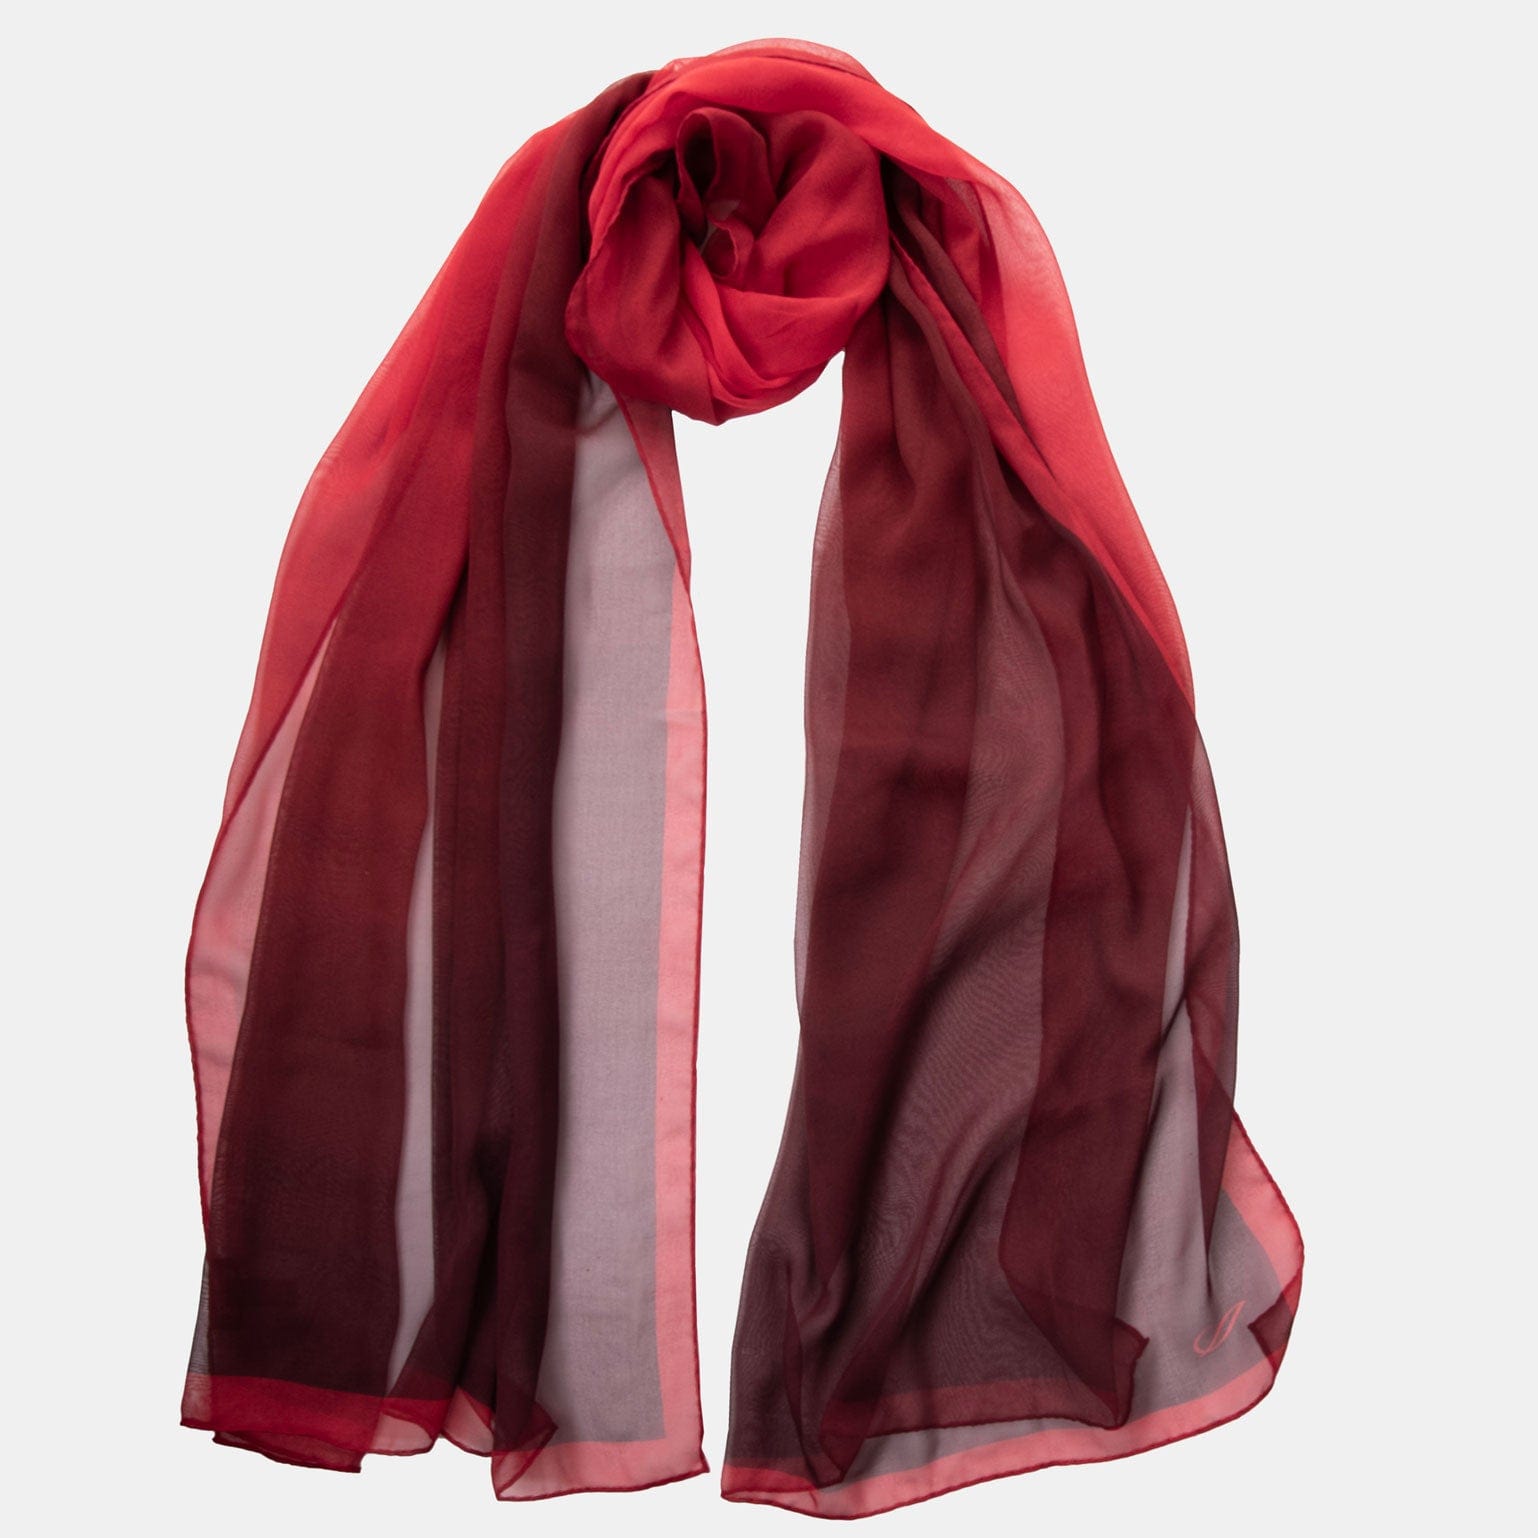 Best red burgundy Italian silk shawl wrap for evenings